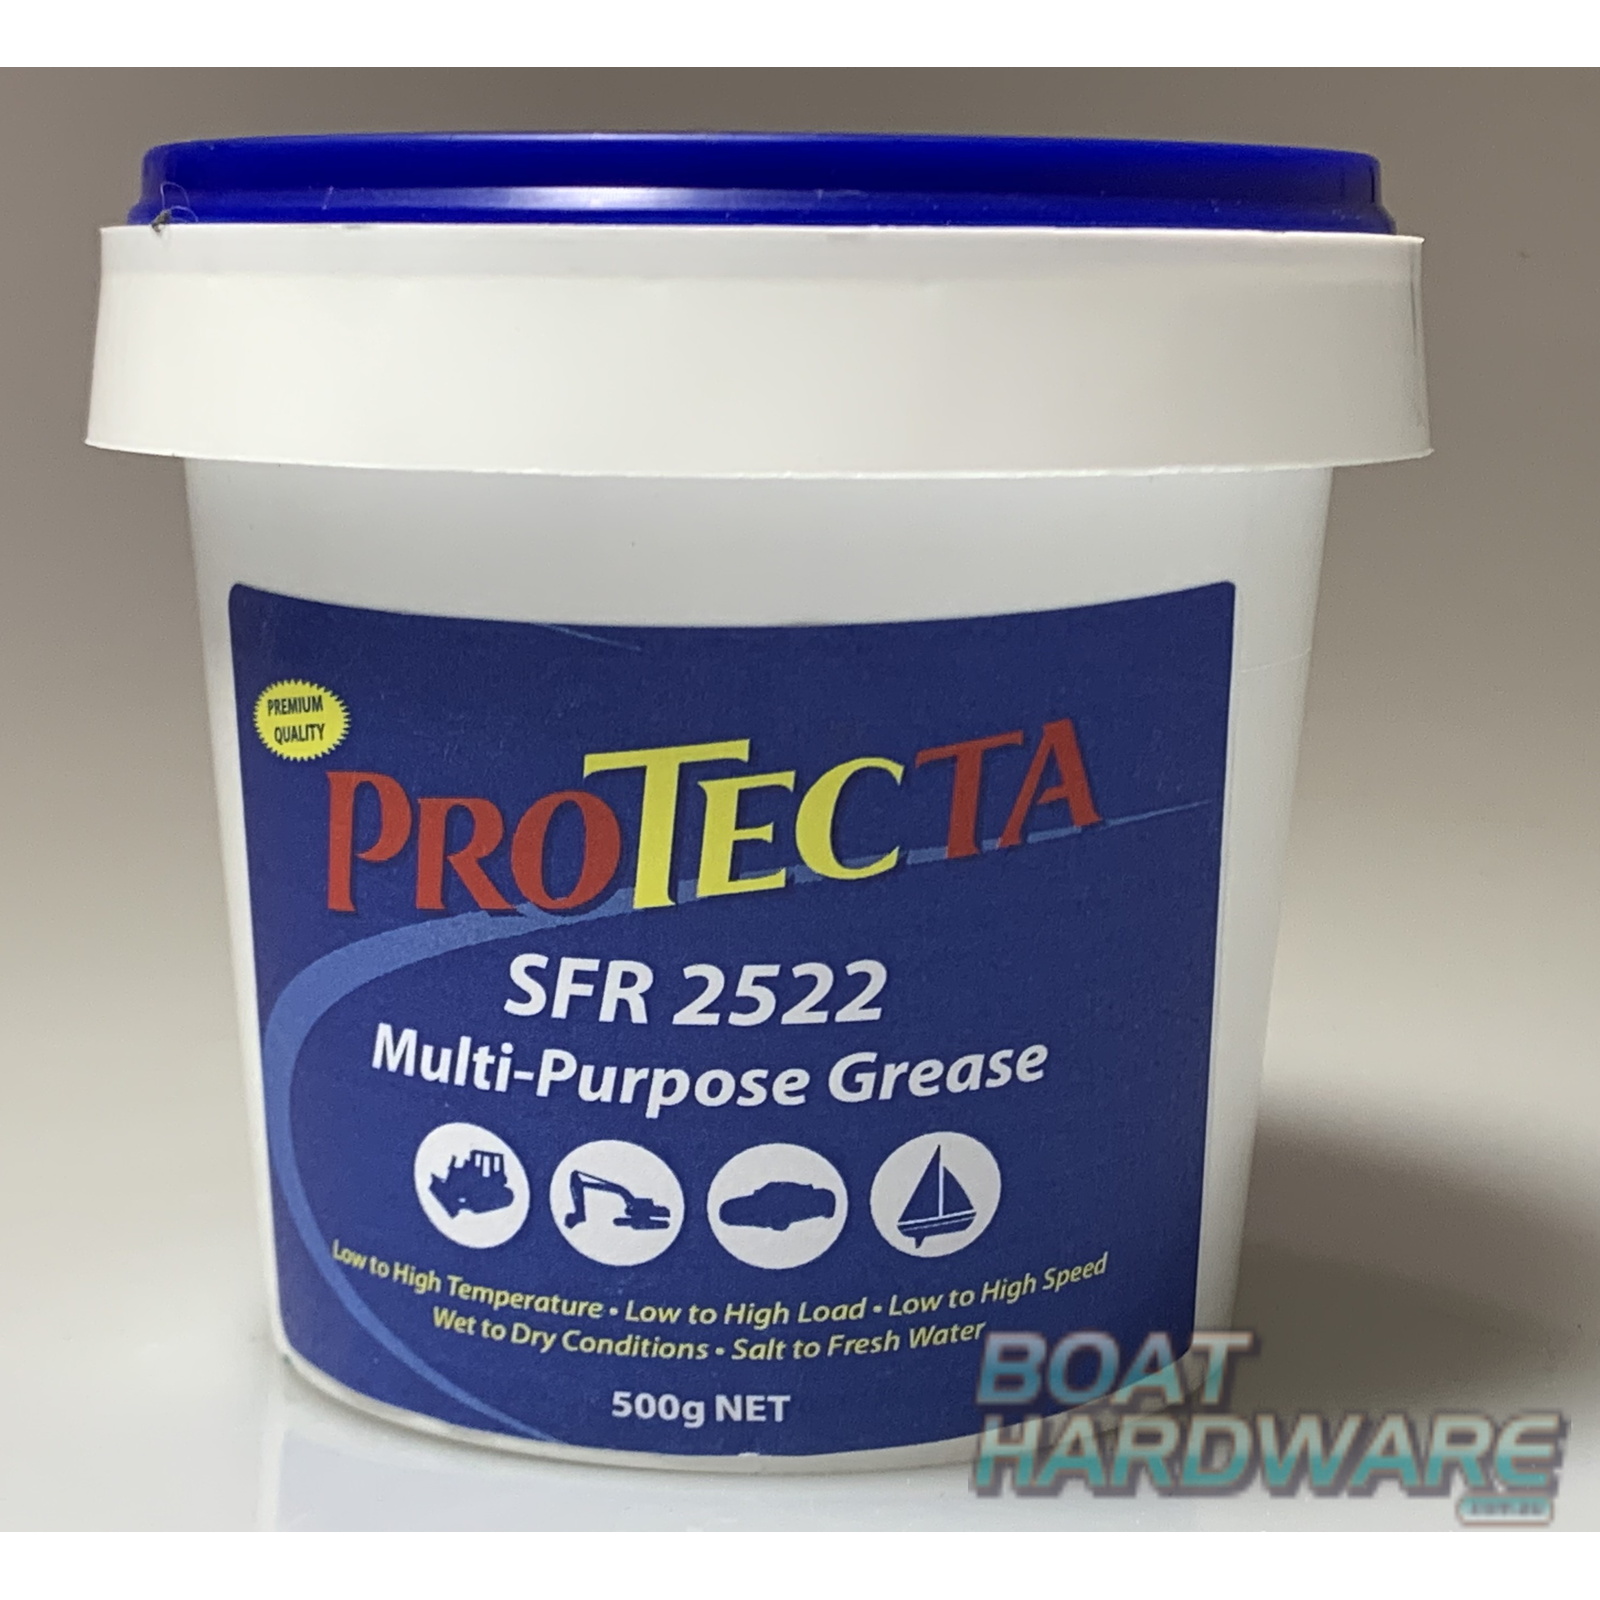 Protecta SFR2522 Multi-Purpose Grease 500g Tub